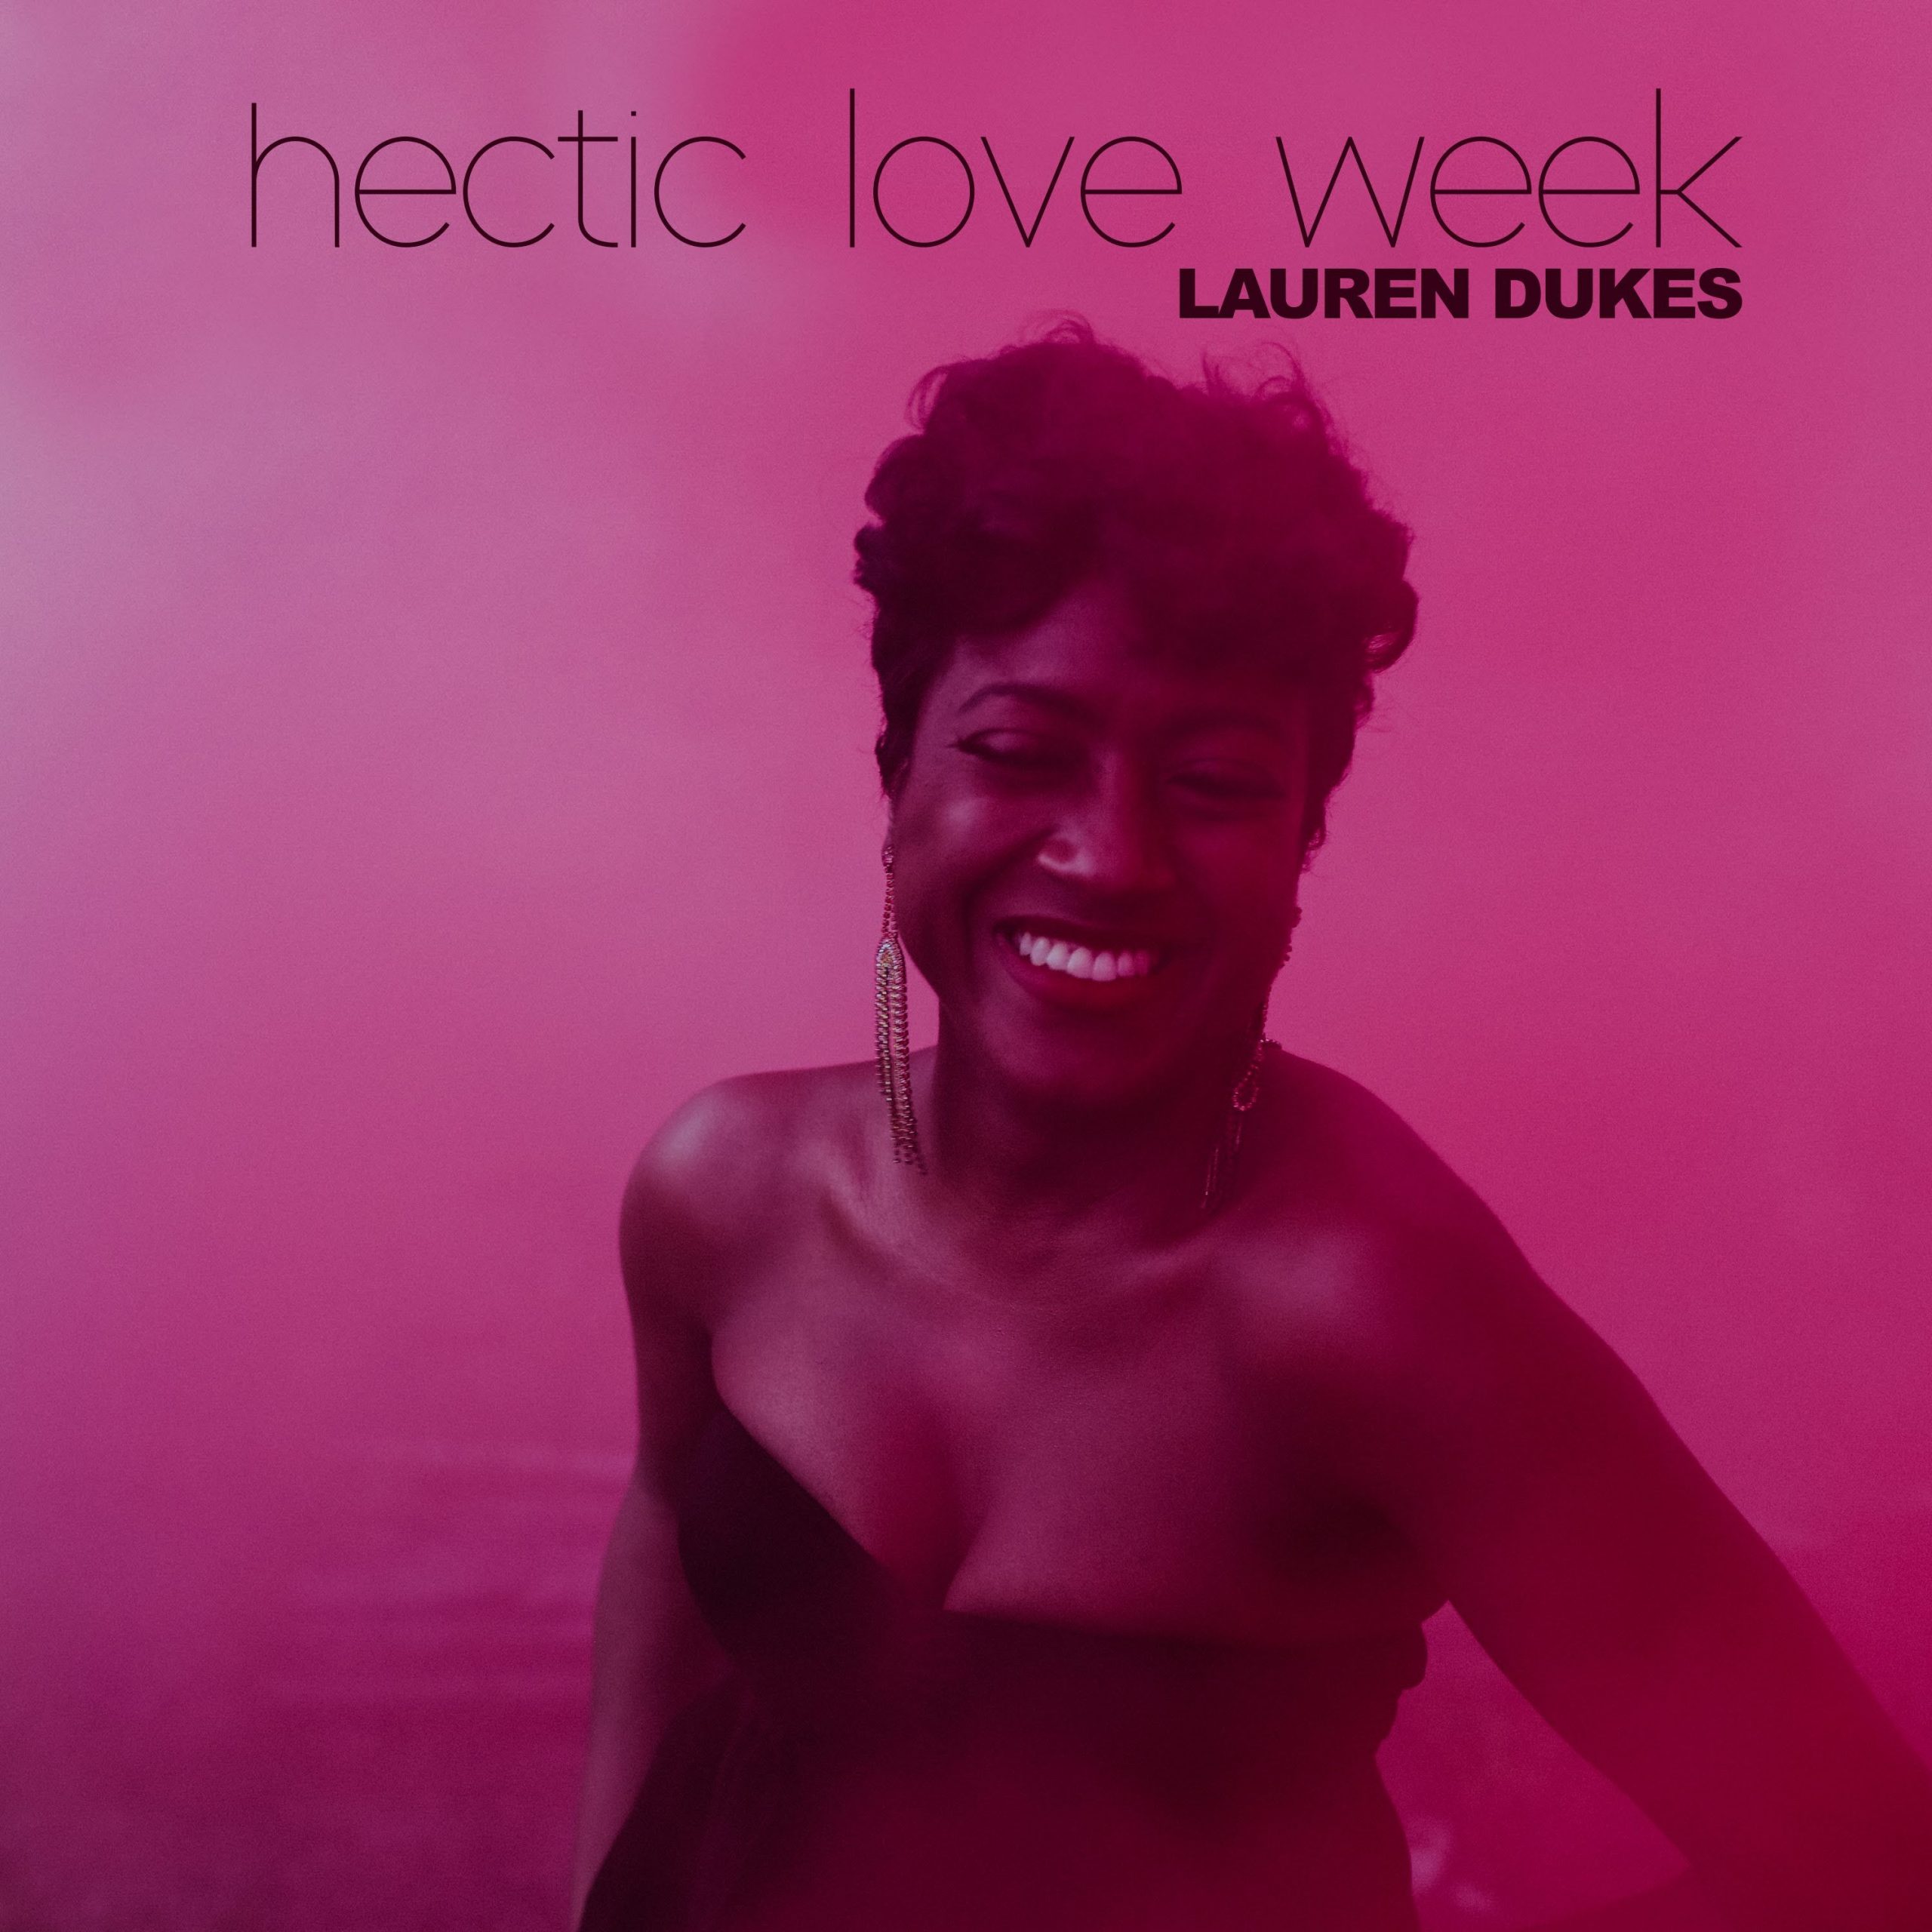 Hectic-Love-Week-by-Lauren-Dukes-scaled.jpeg